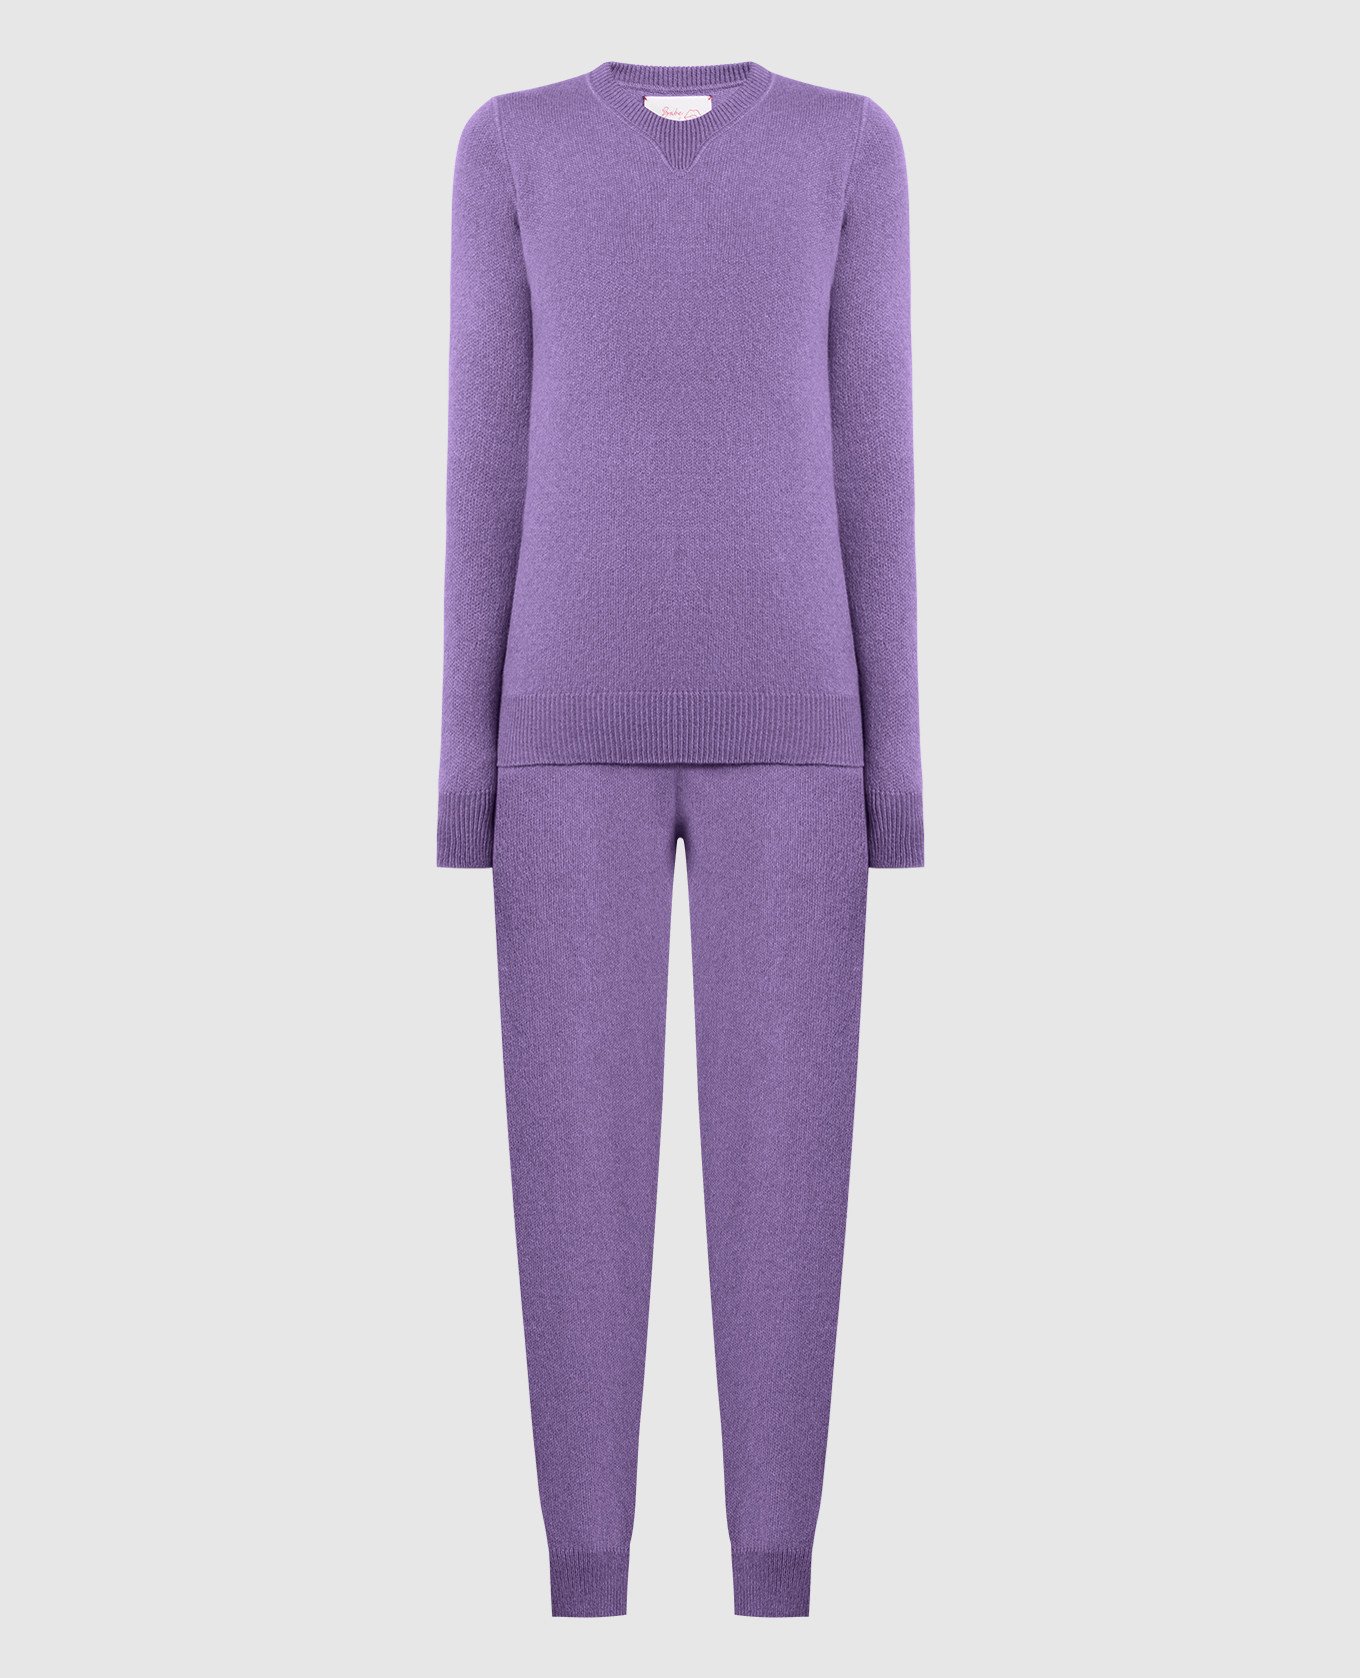 Purple cashmere jumper and joggers suit